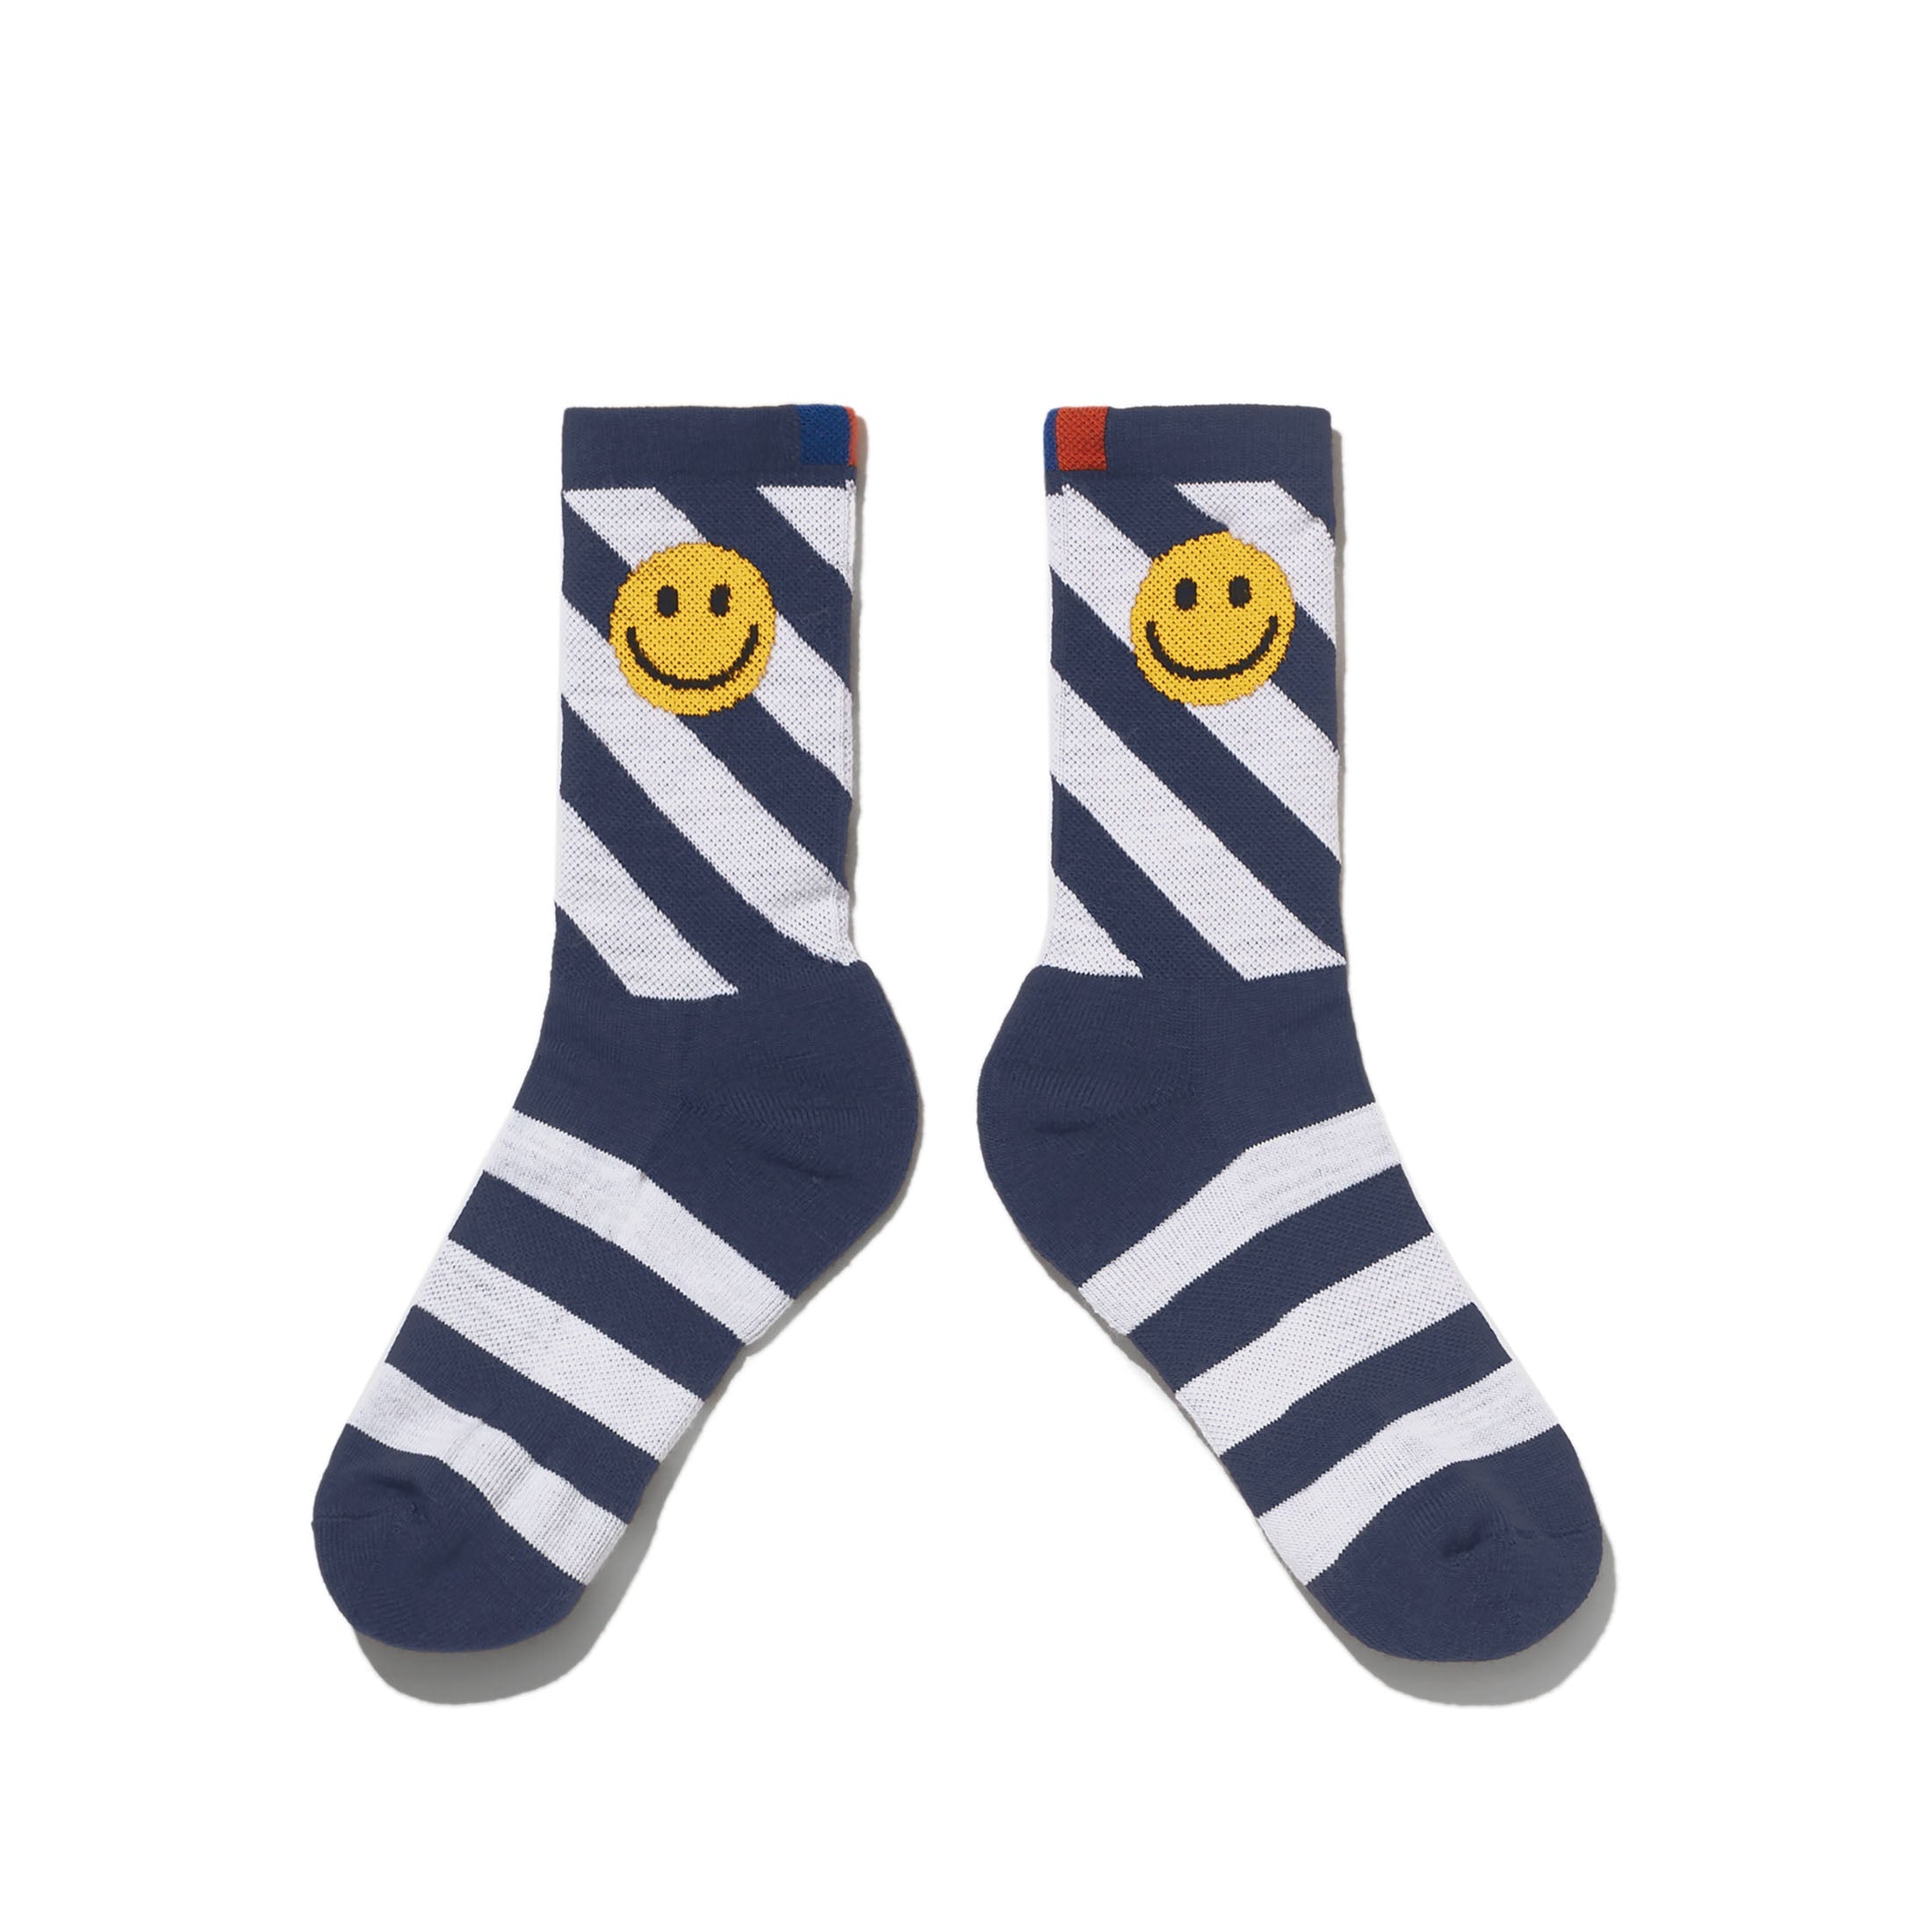 The Women's Diagonal Smile Stripe Sock - Navy/White